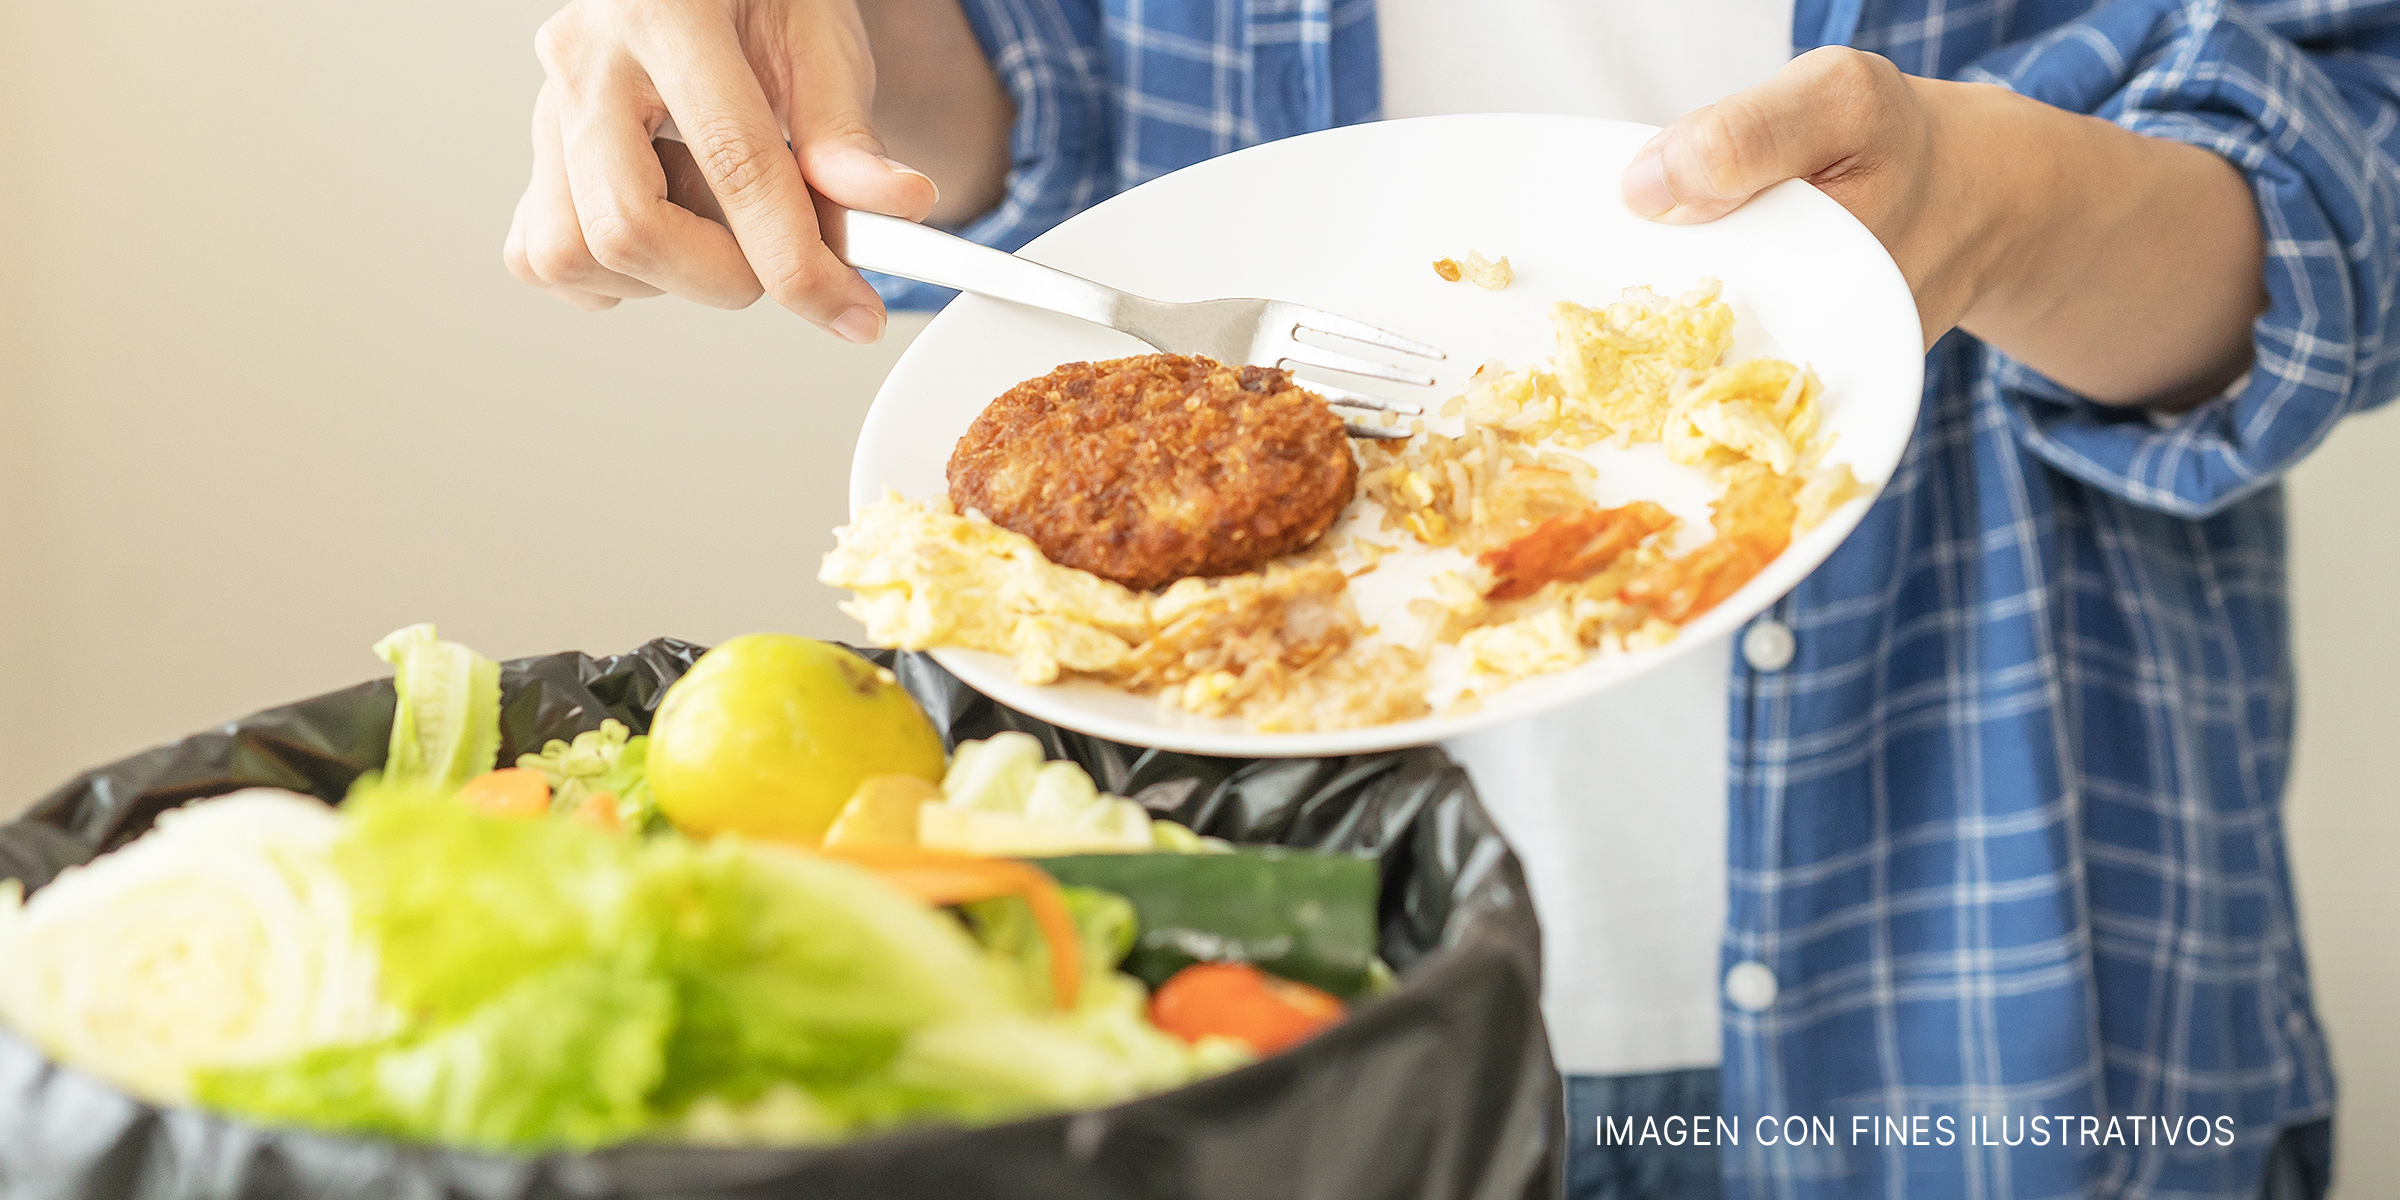 Persona bota comida | Foto: Shutterstock